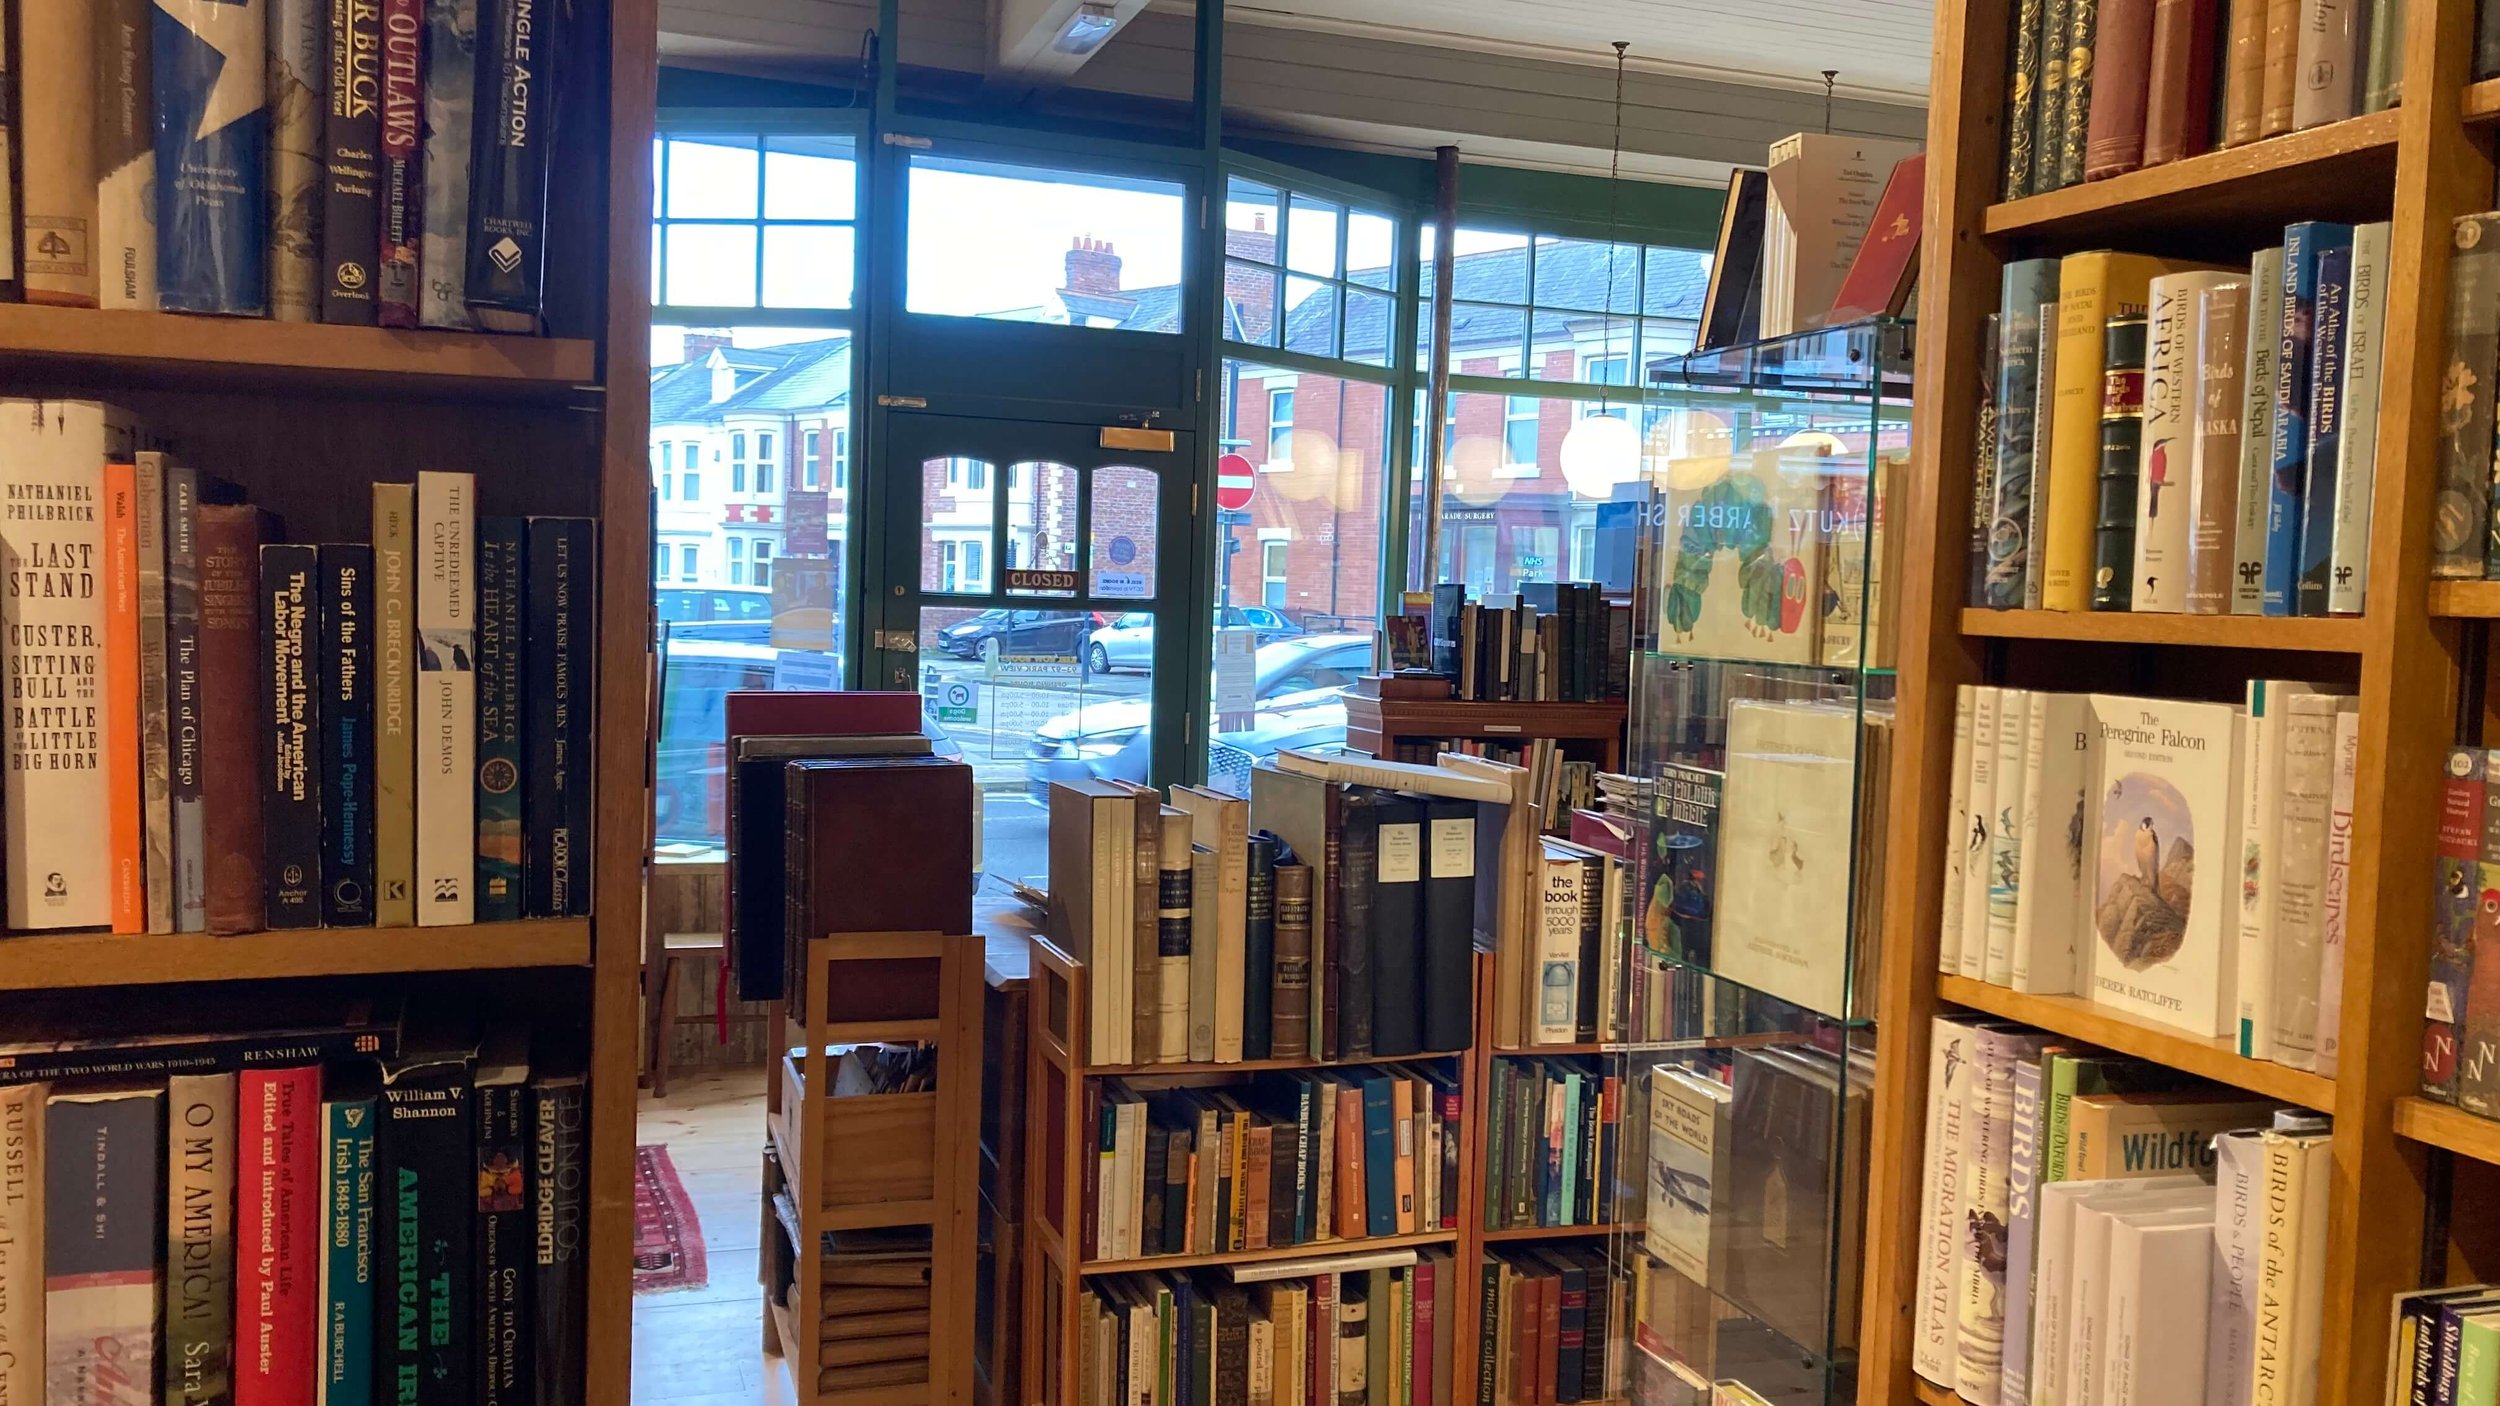 Inside Keel Row Books